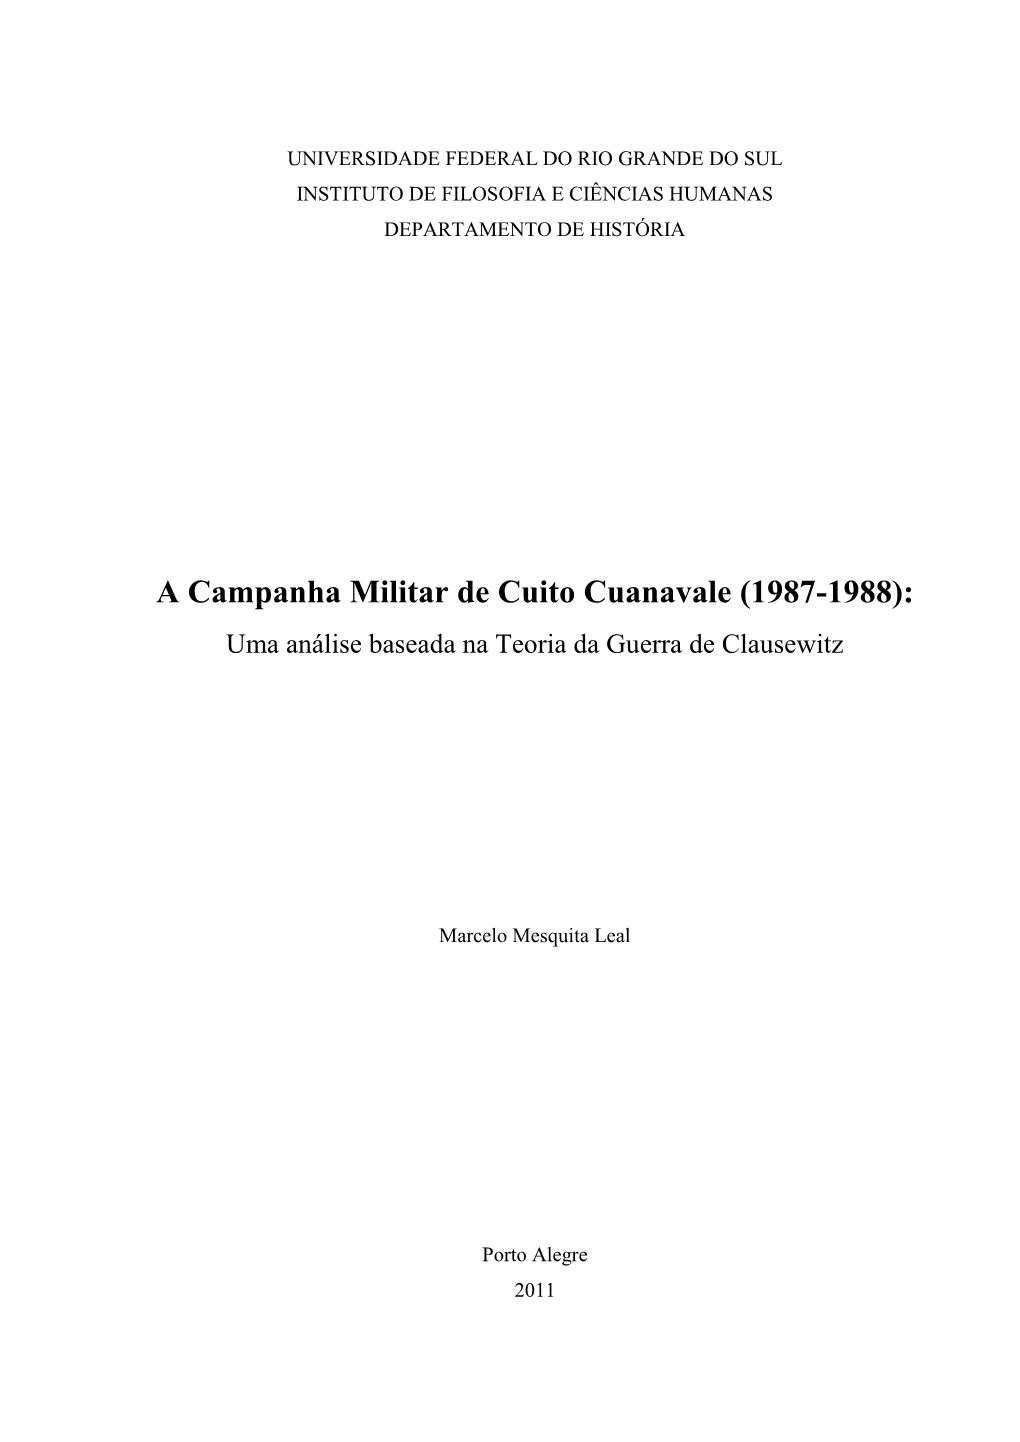 A Campanha Militar De Cuito Cuanavale (1987-1988): Uma Análise Baseada Na Teoria Da Guerra De Clausewitz